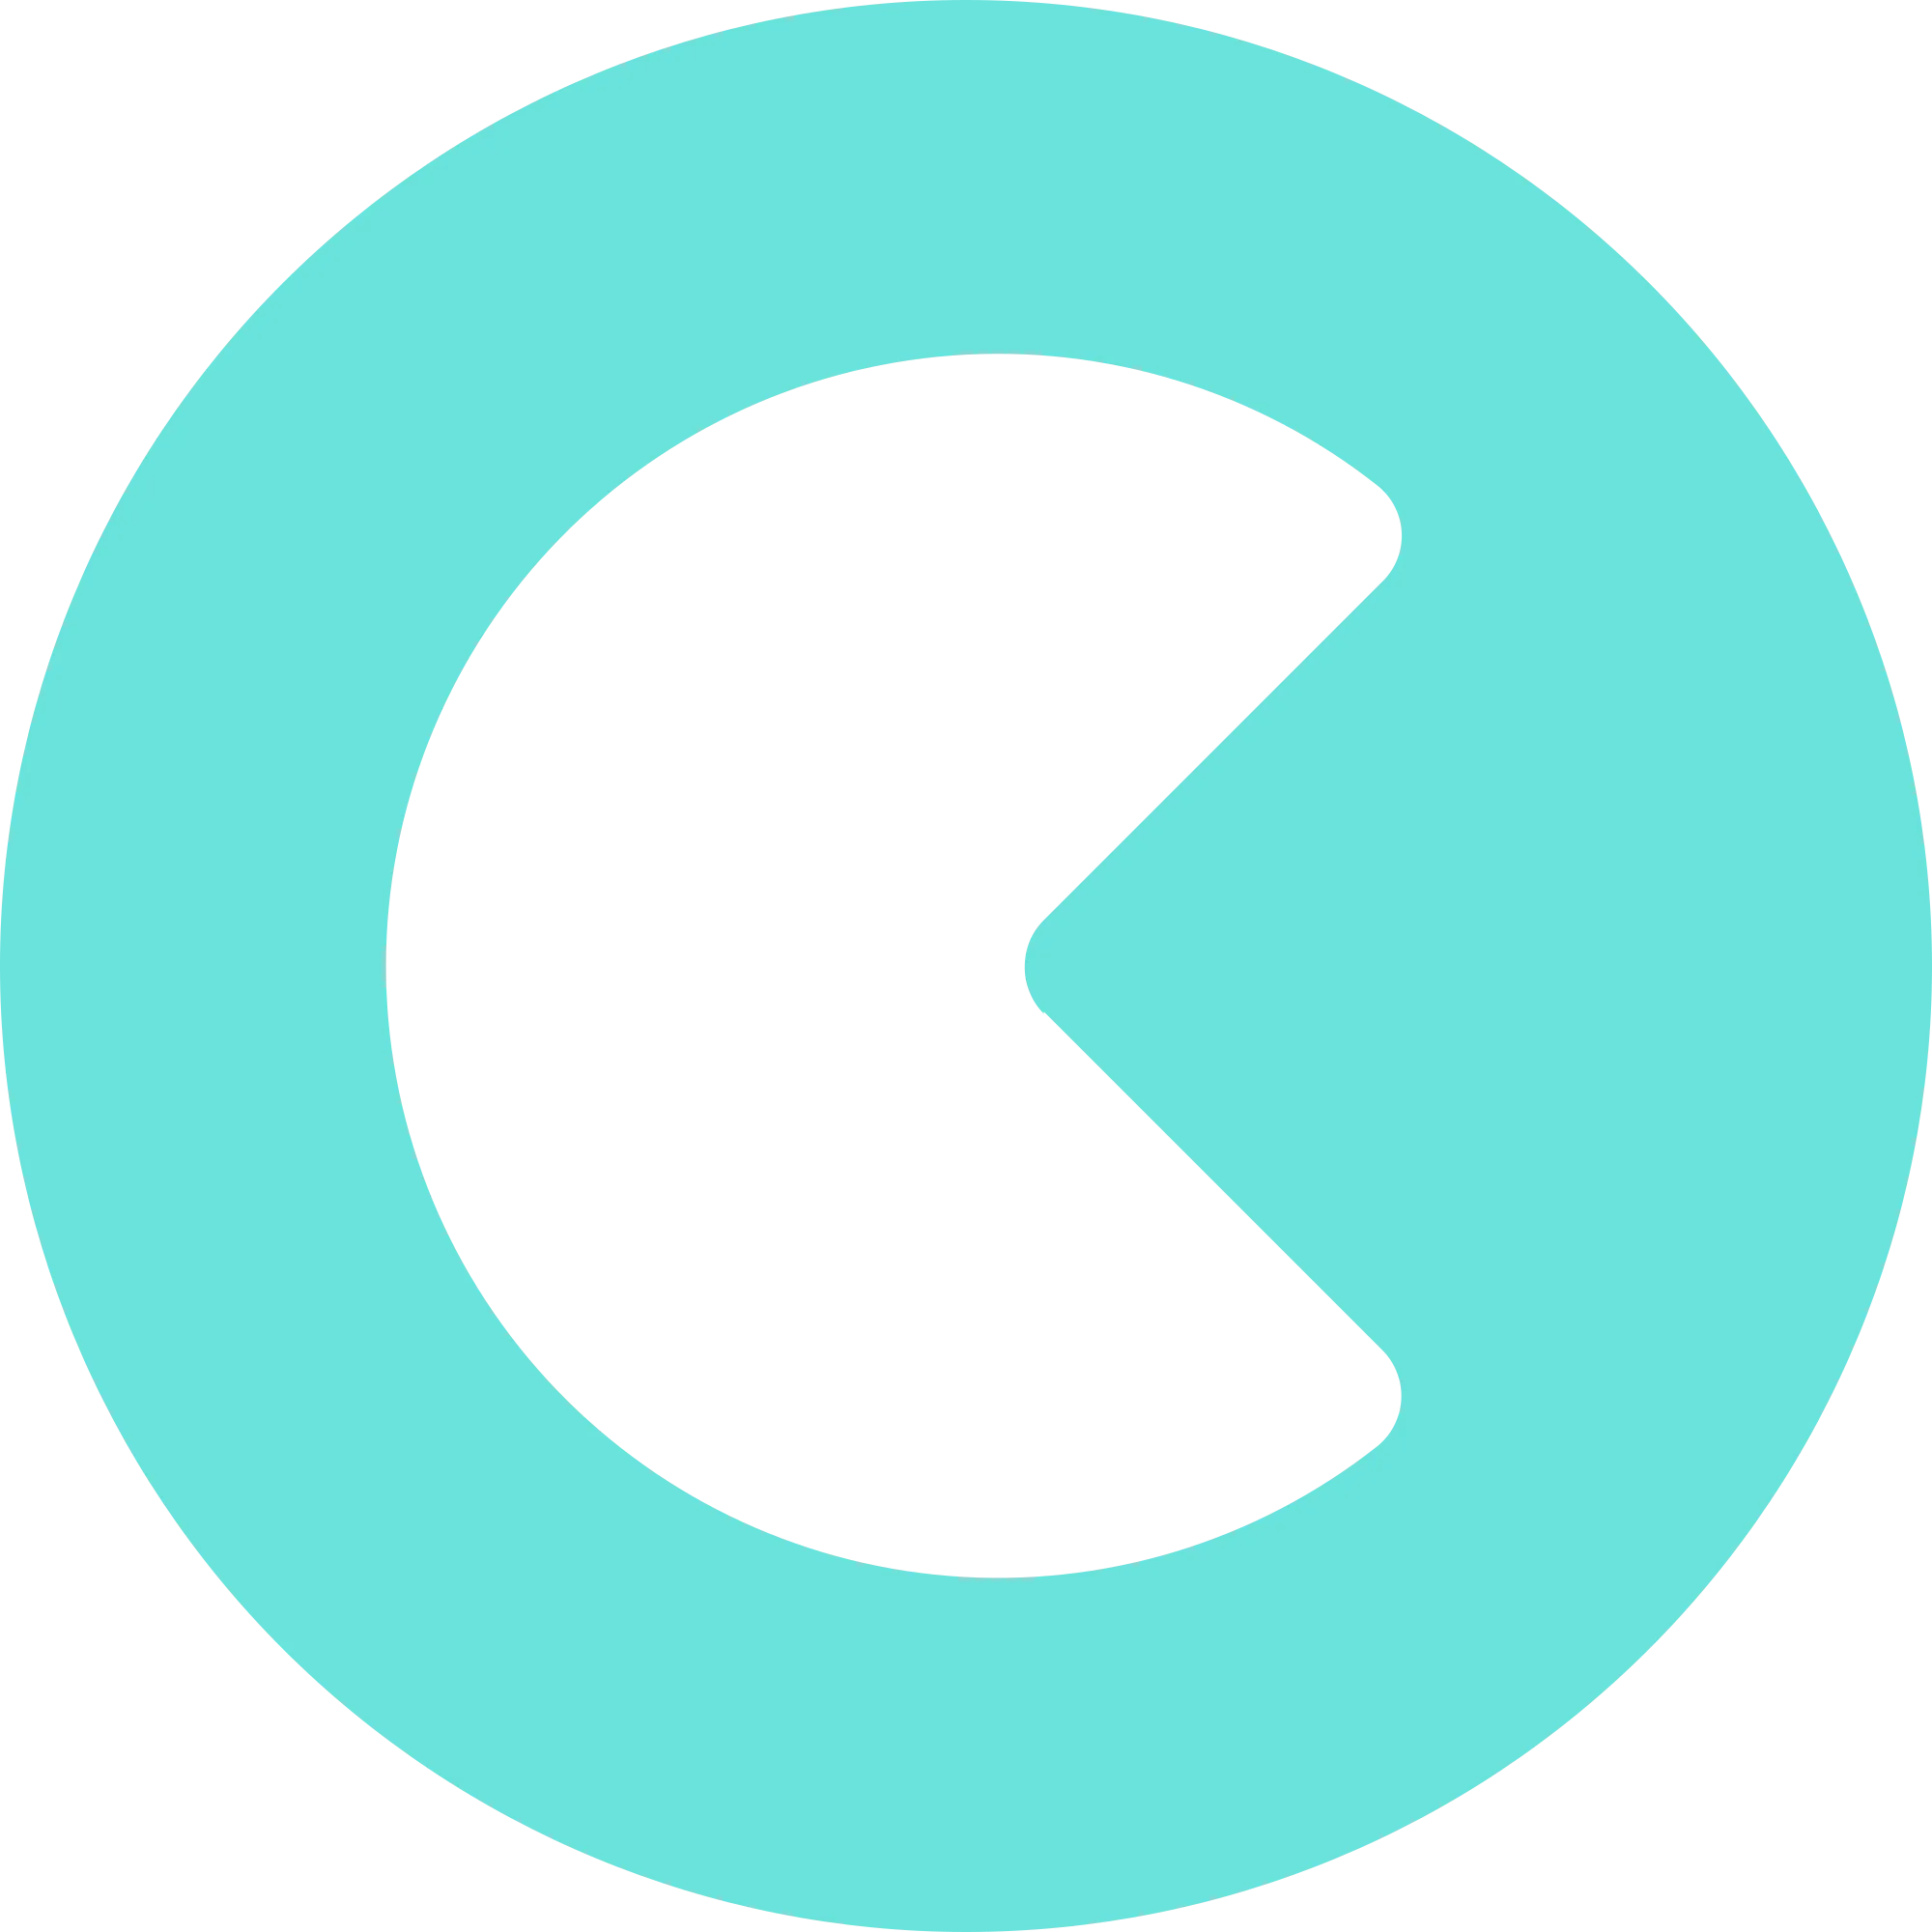 Cream Finance logo in png format